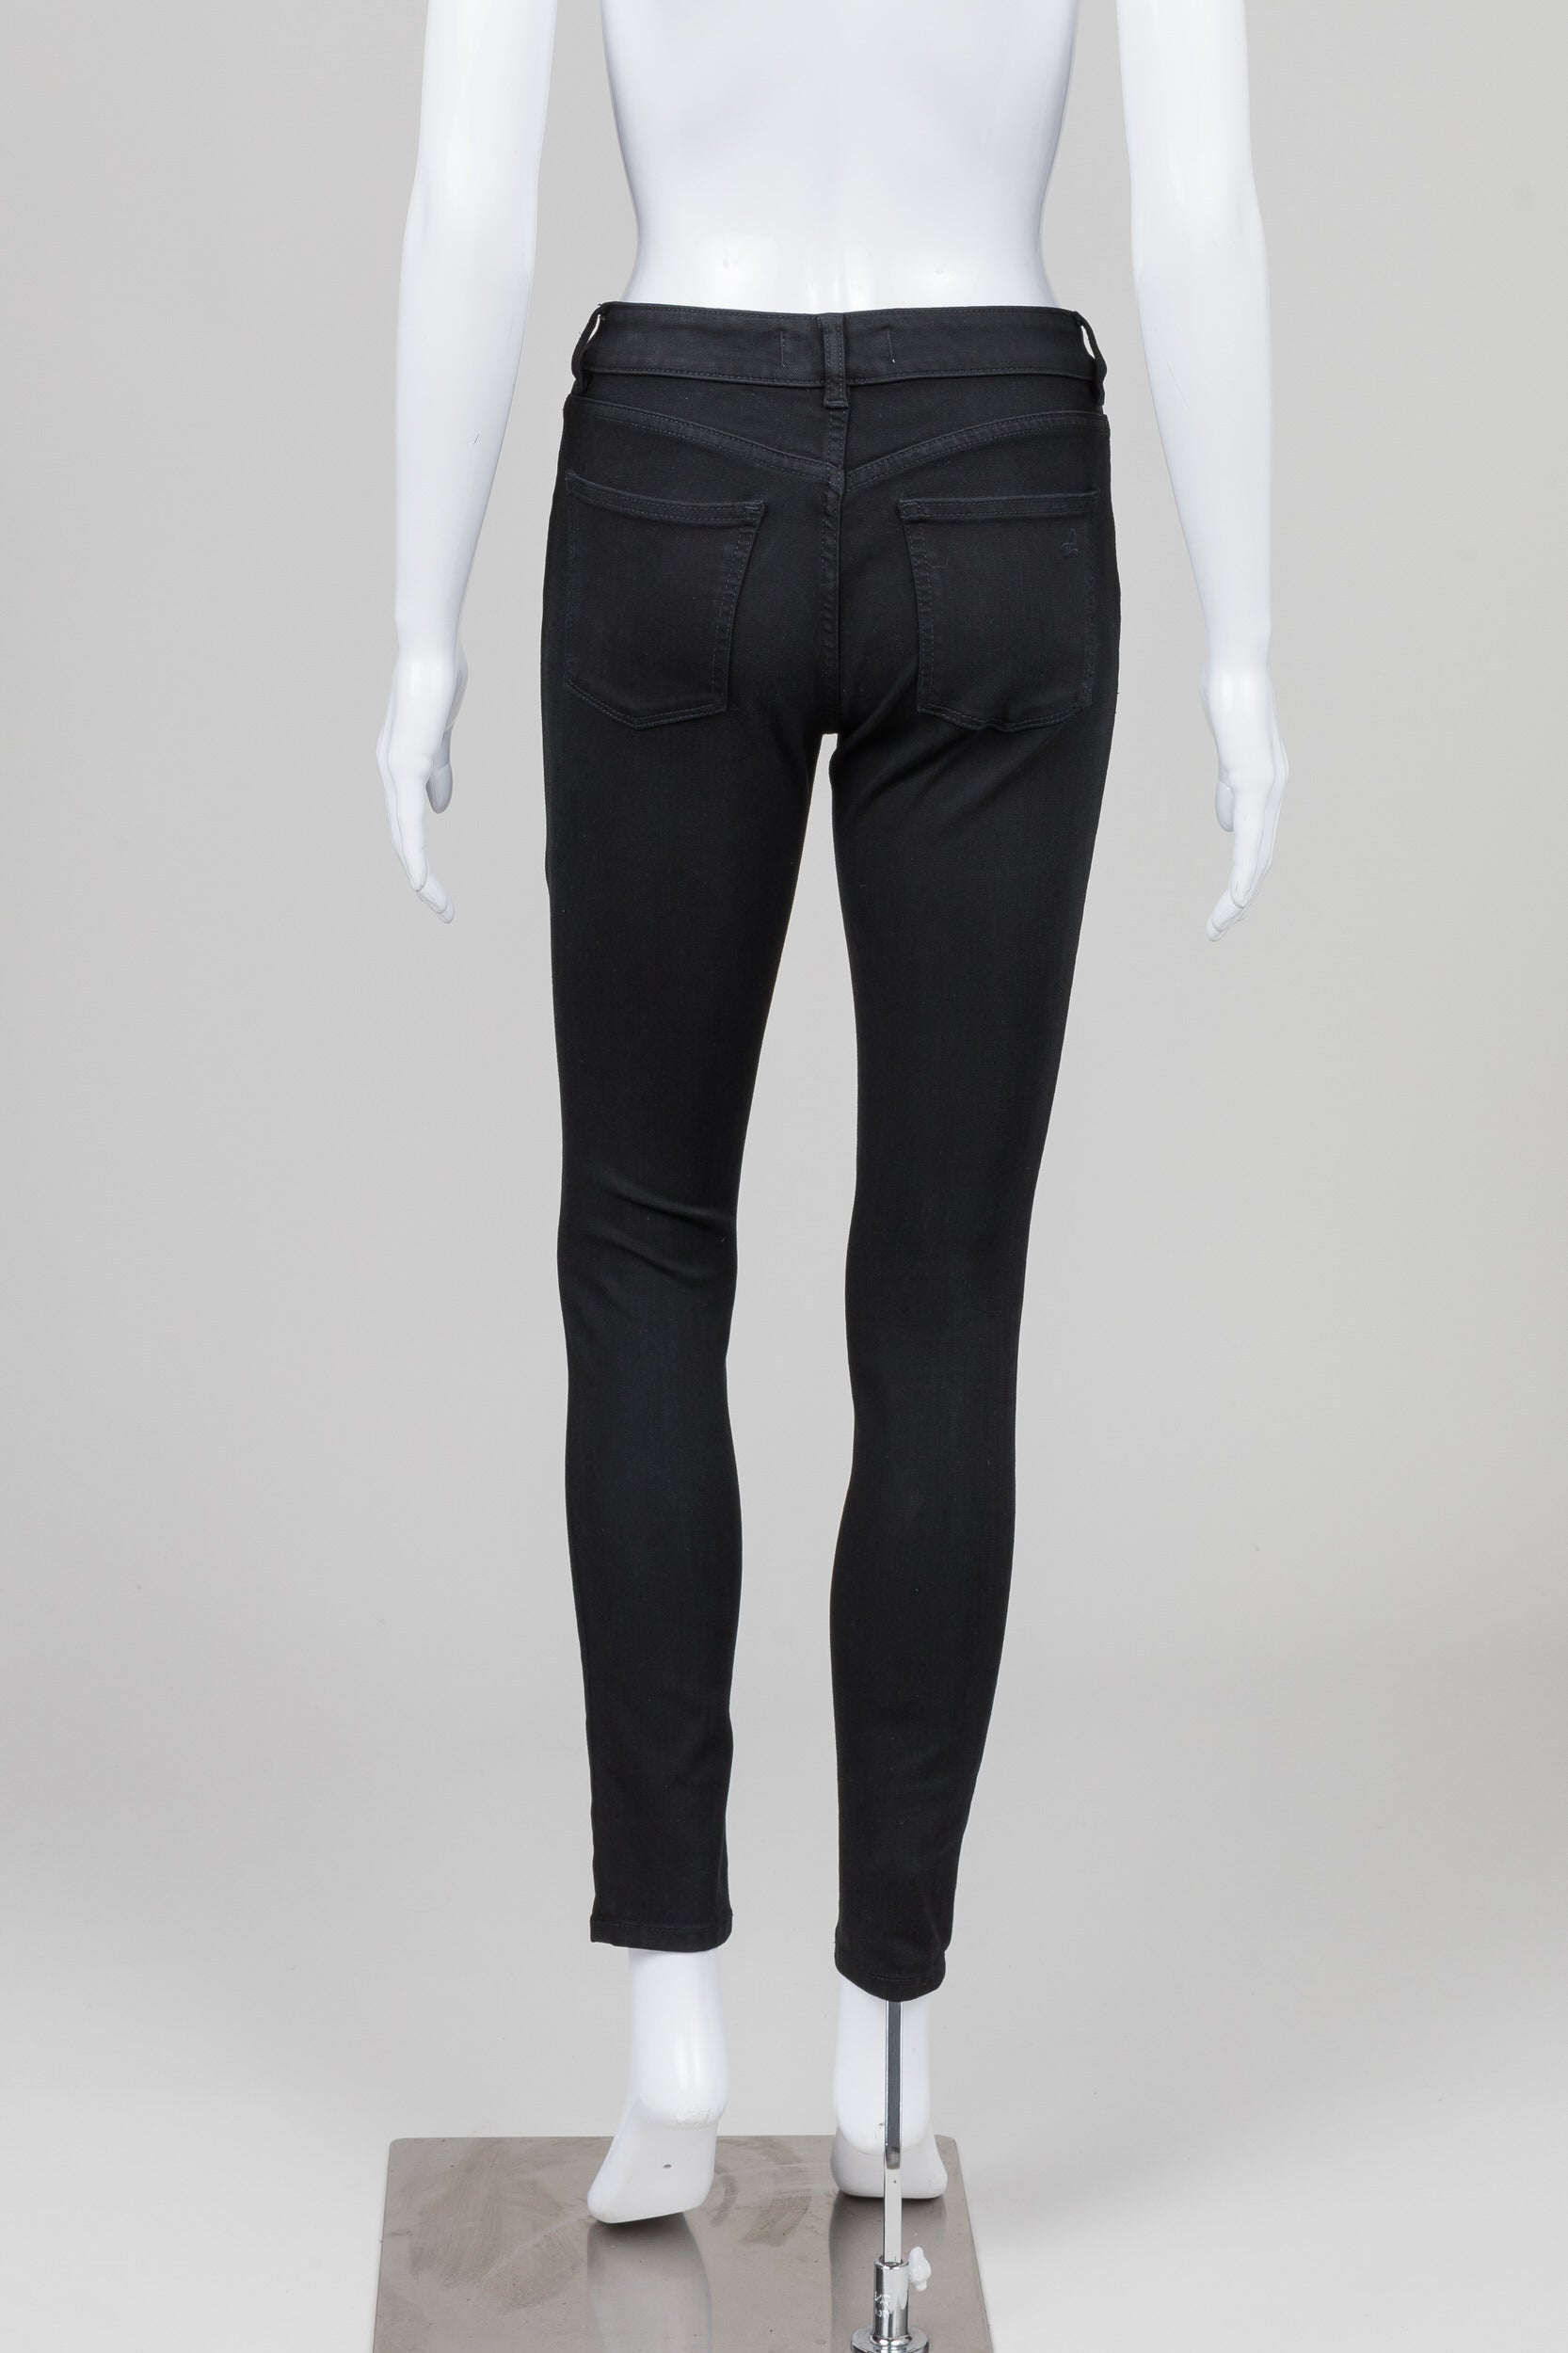 DL1961 Black Skinny Jeans (26)